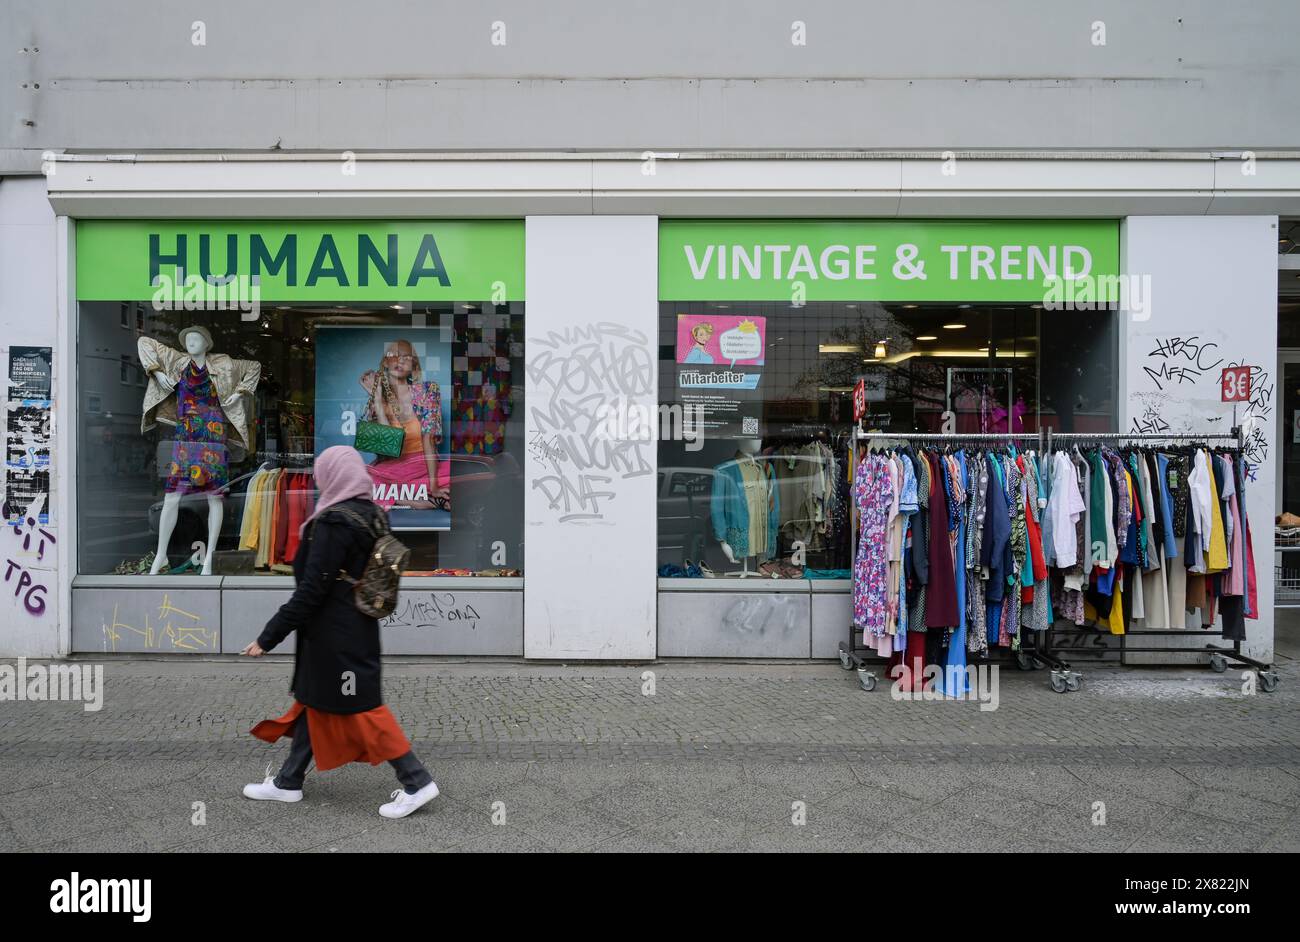 Humana Second Hand Textilien, Turmstraße, Moabit, Mitte, Berlin, Deutschland Stockfoto